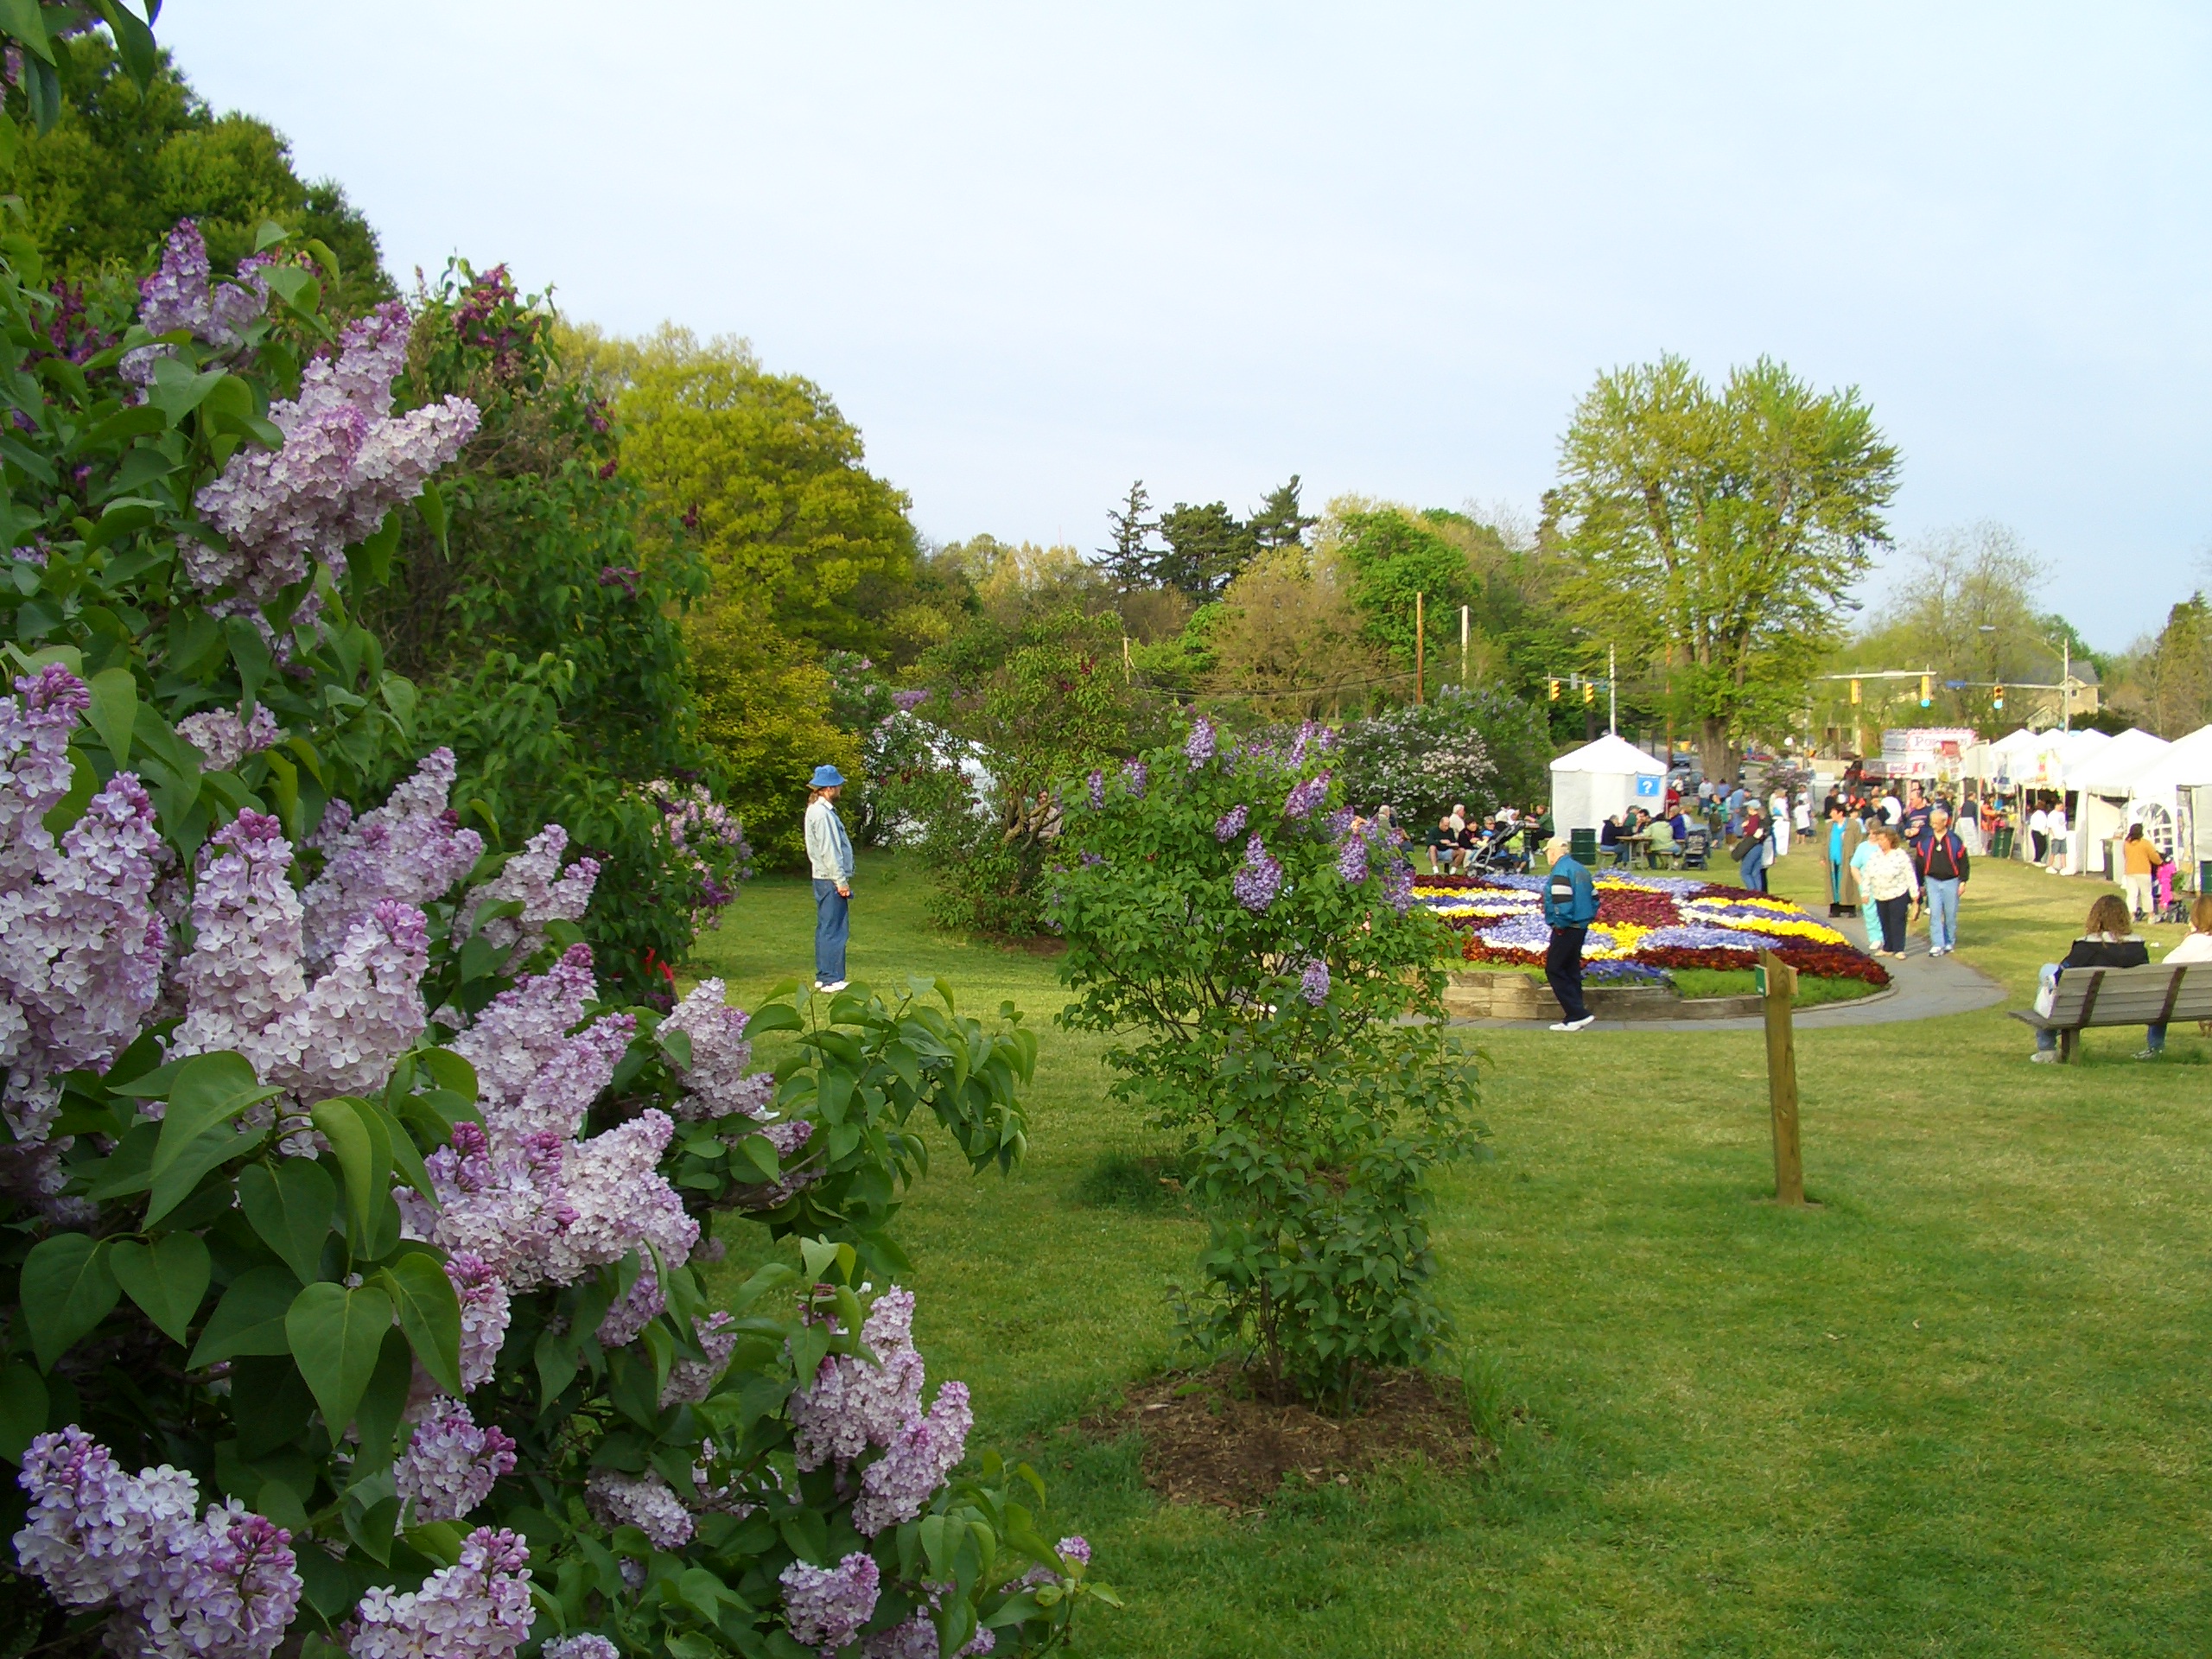 Lilac Festival